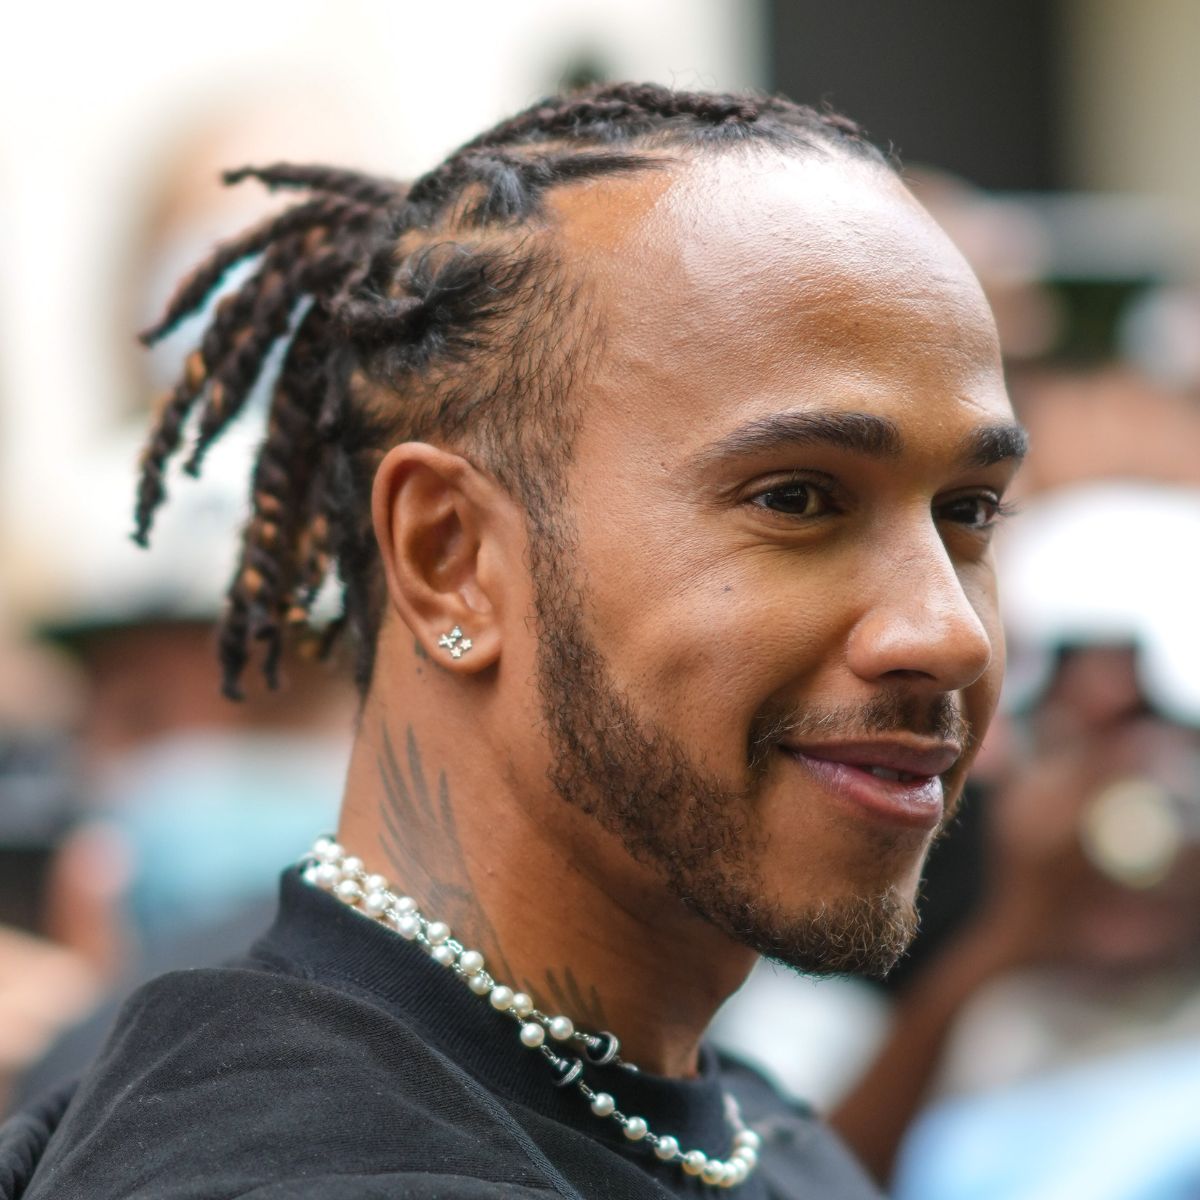 Lewis Hamilton: Braided Hairstyle